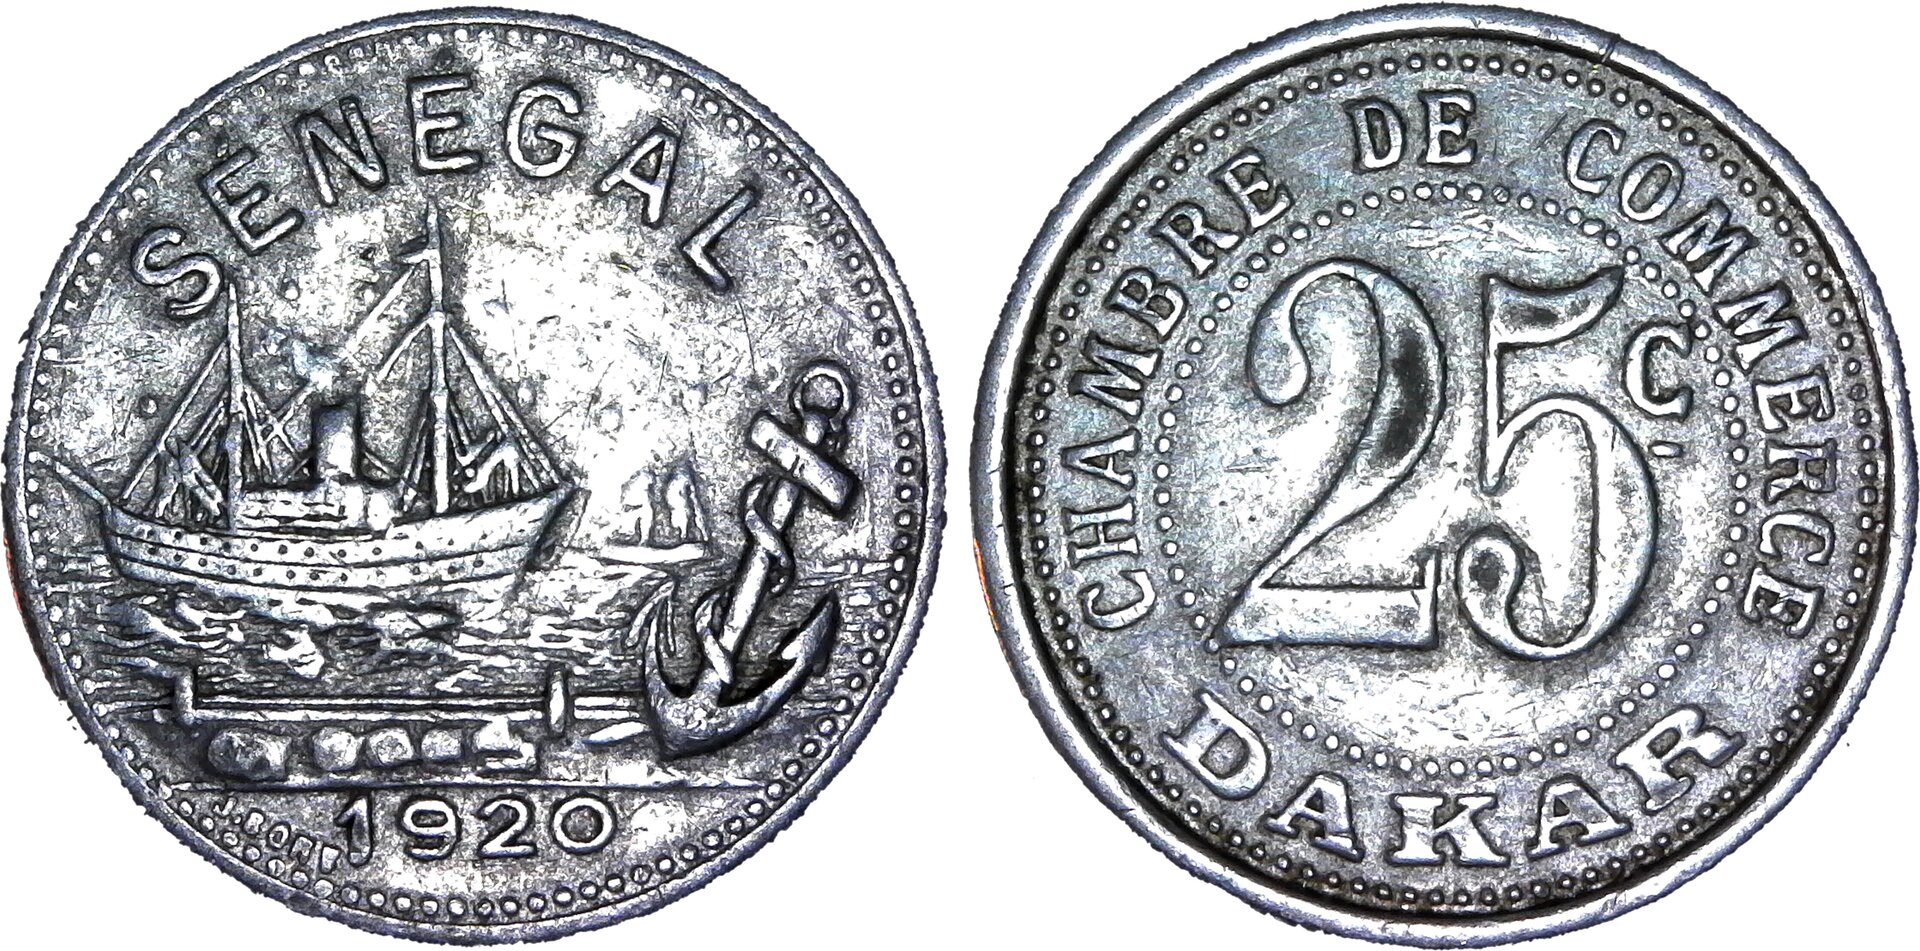 Dakar Senegal 25 centimes 1920 obv-side-cutout.jpg